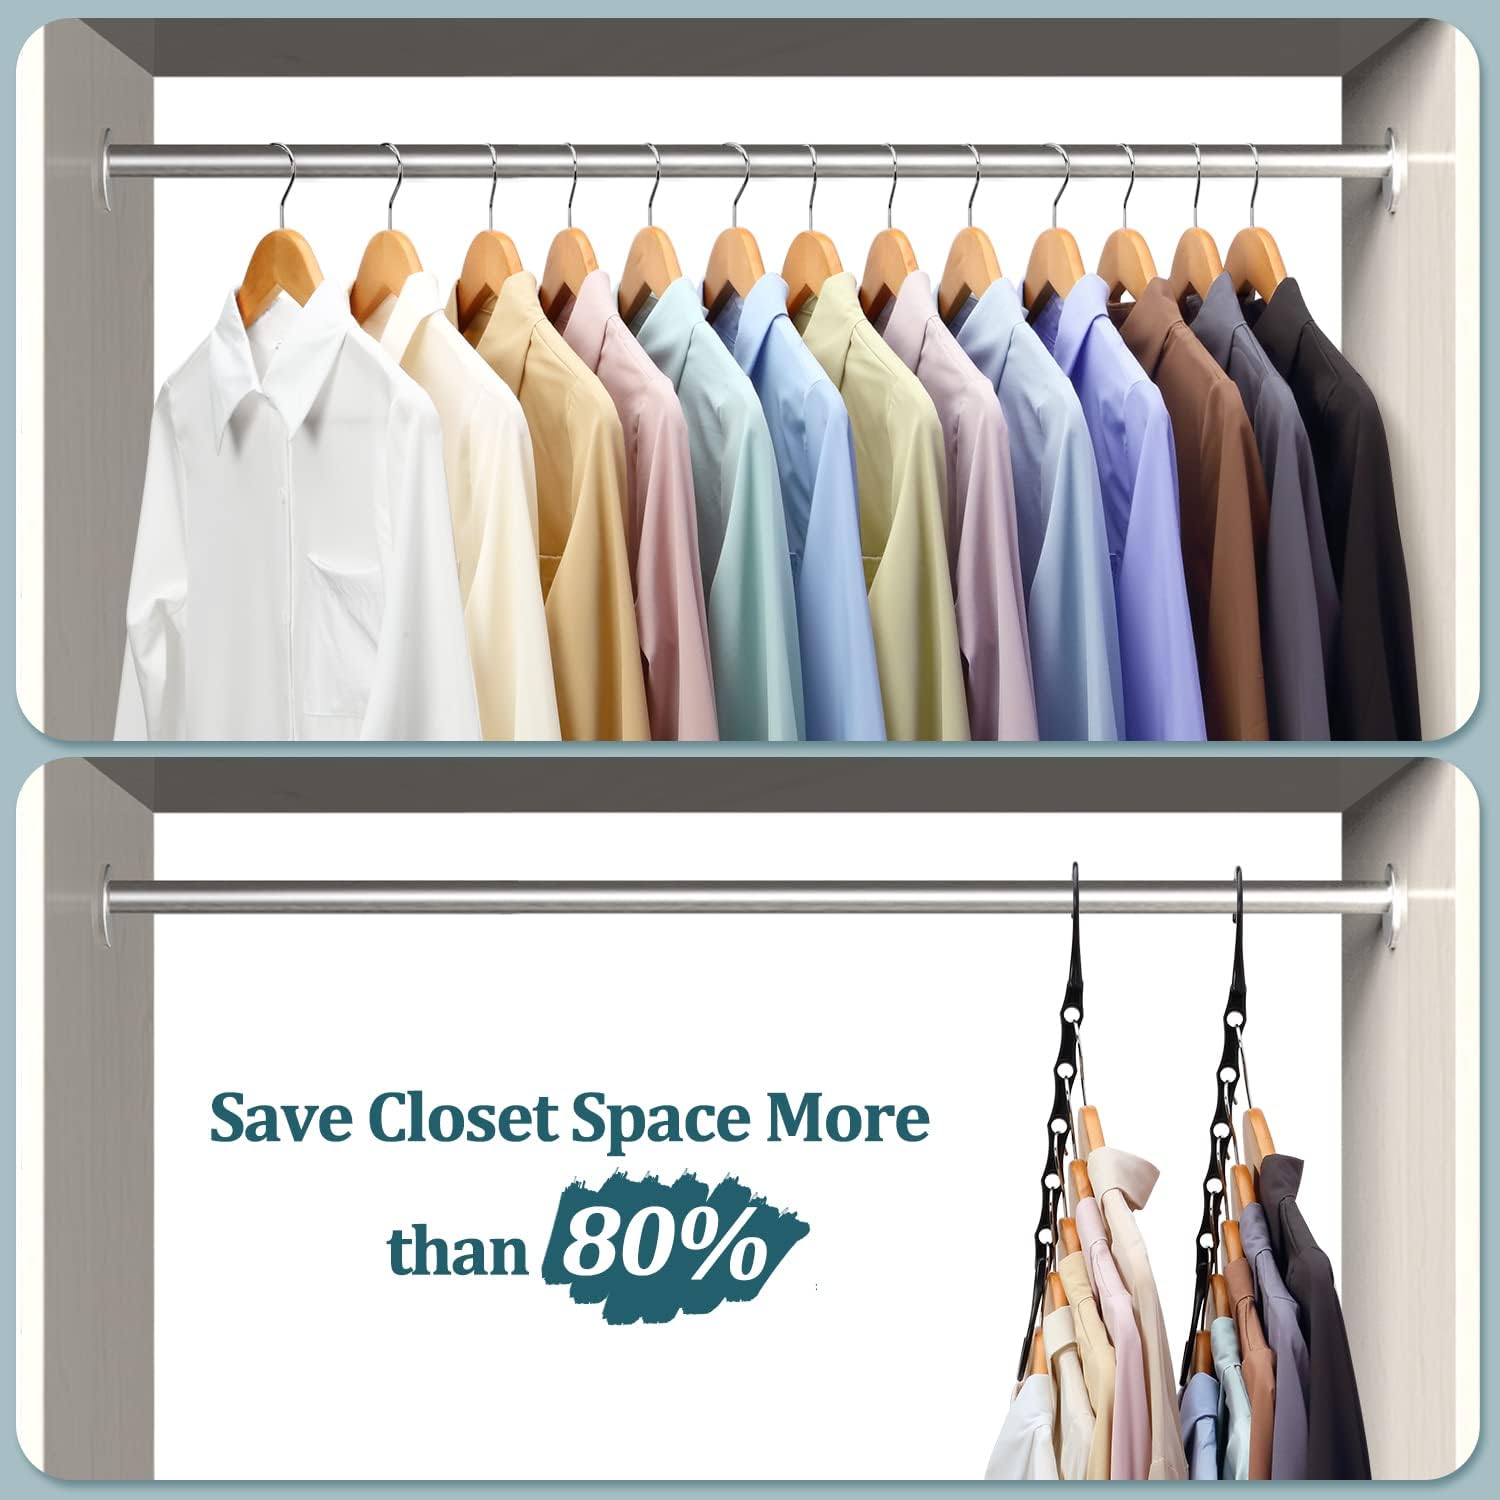 Closet Organizers and Storage,6 Pack Sturdy Closet Organizer Hangers,college Dorm Room Essentials,Closet Storage,Closet Organization,Magic Space